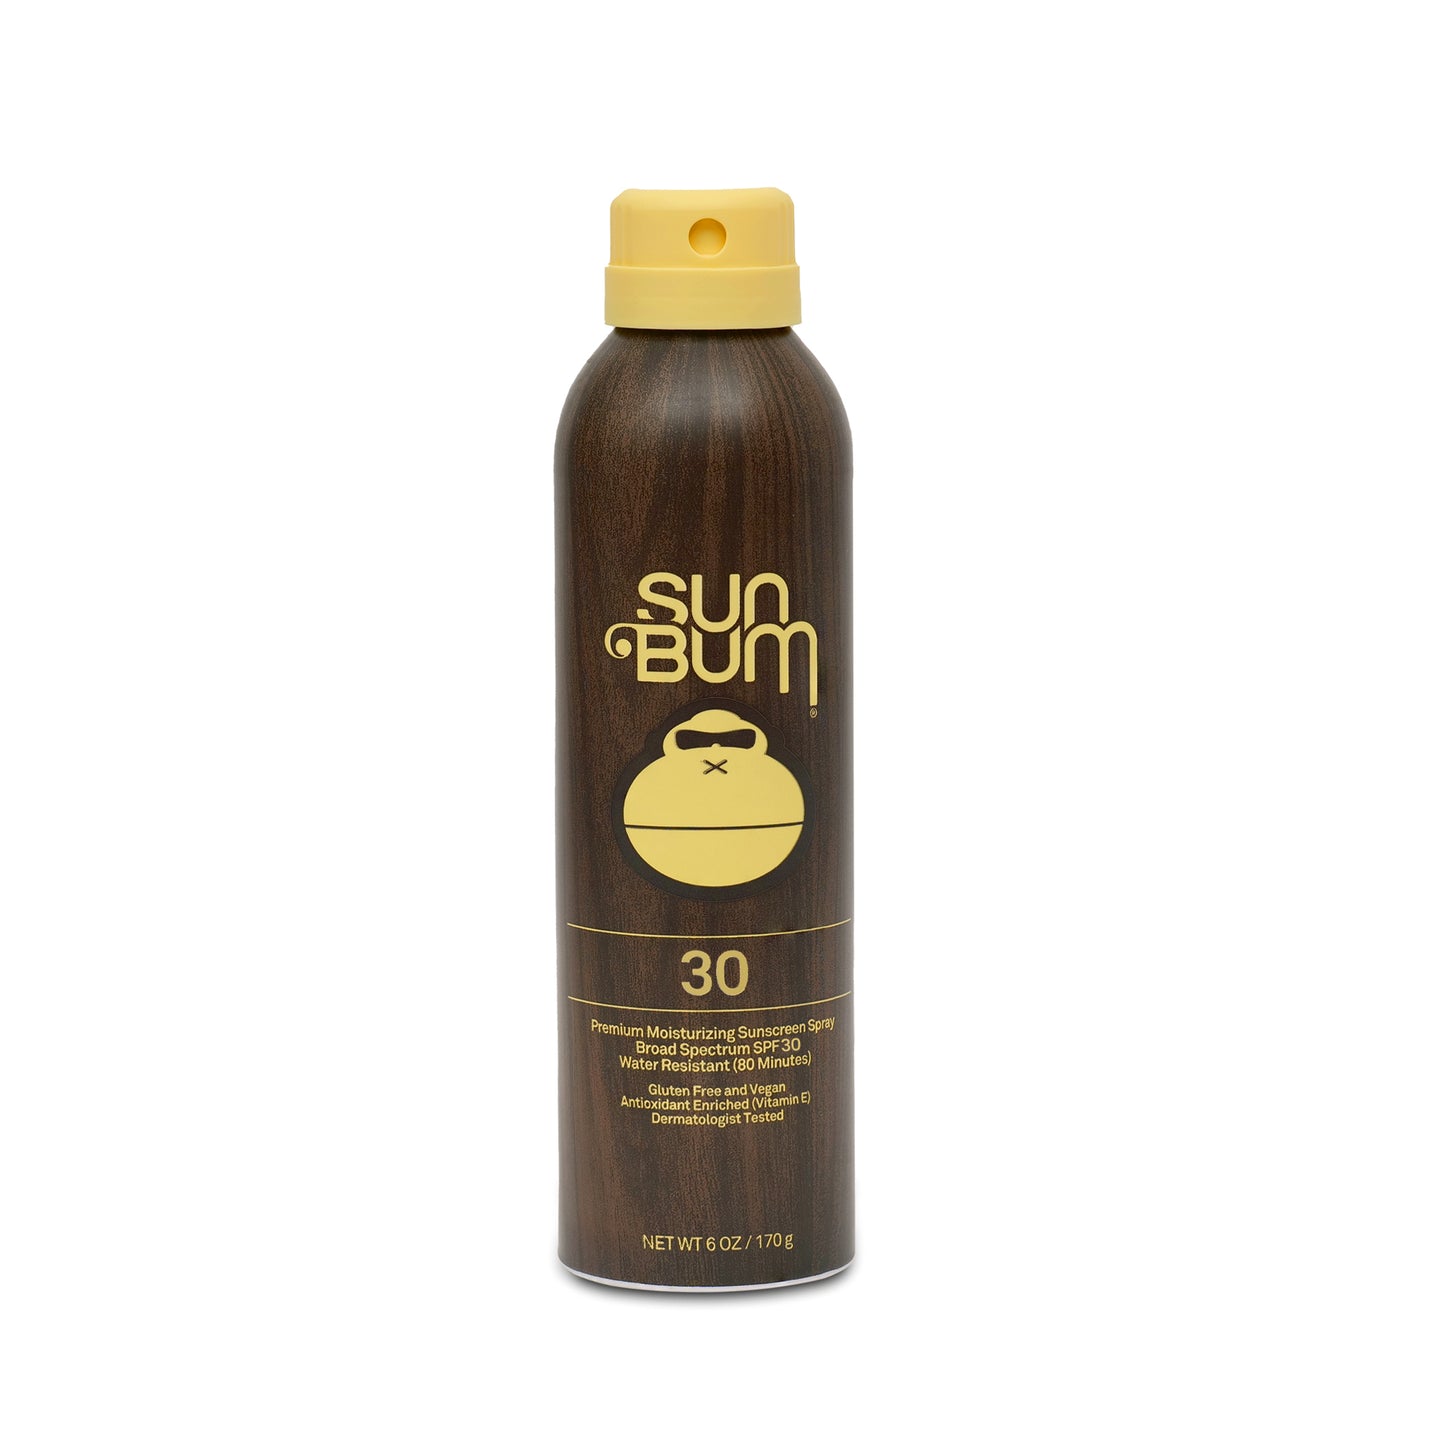 Sun Bum Original Sunscreen Spray SPF30